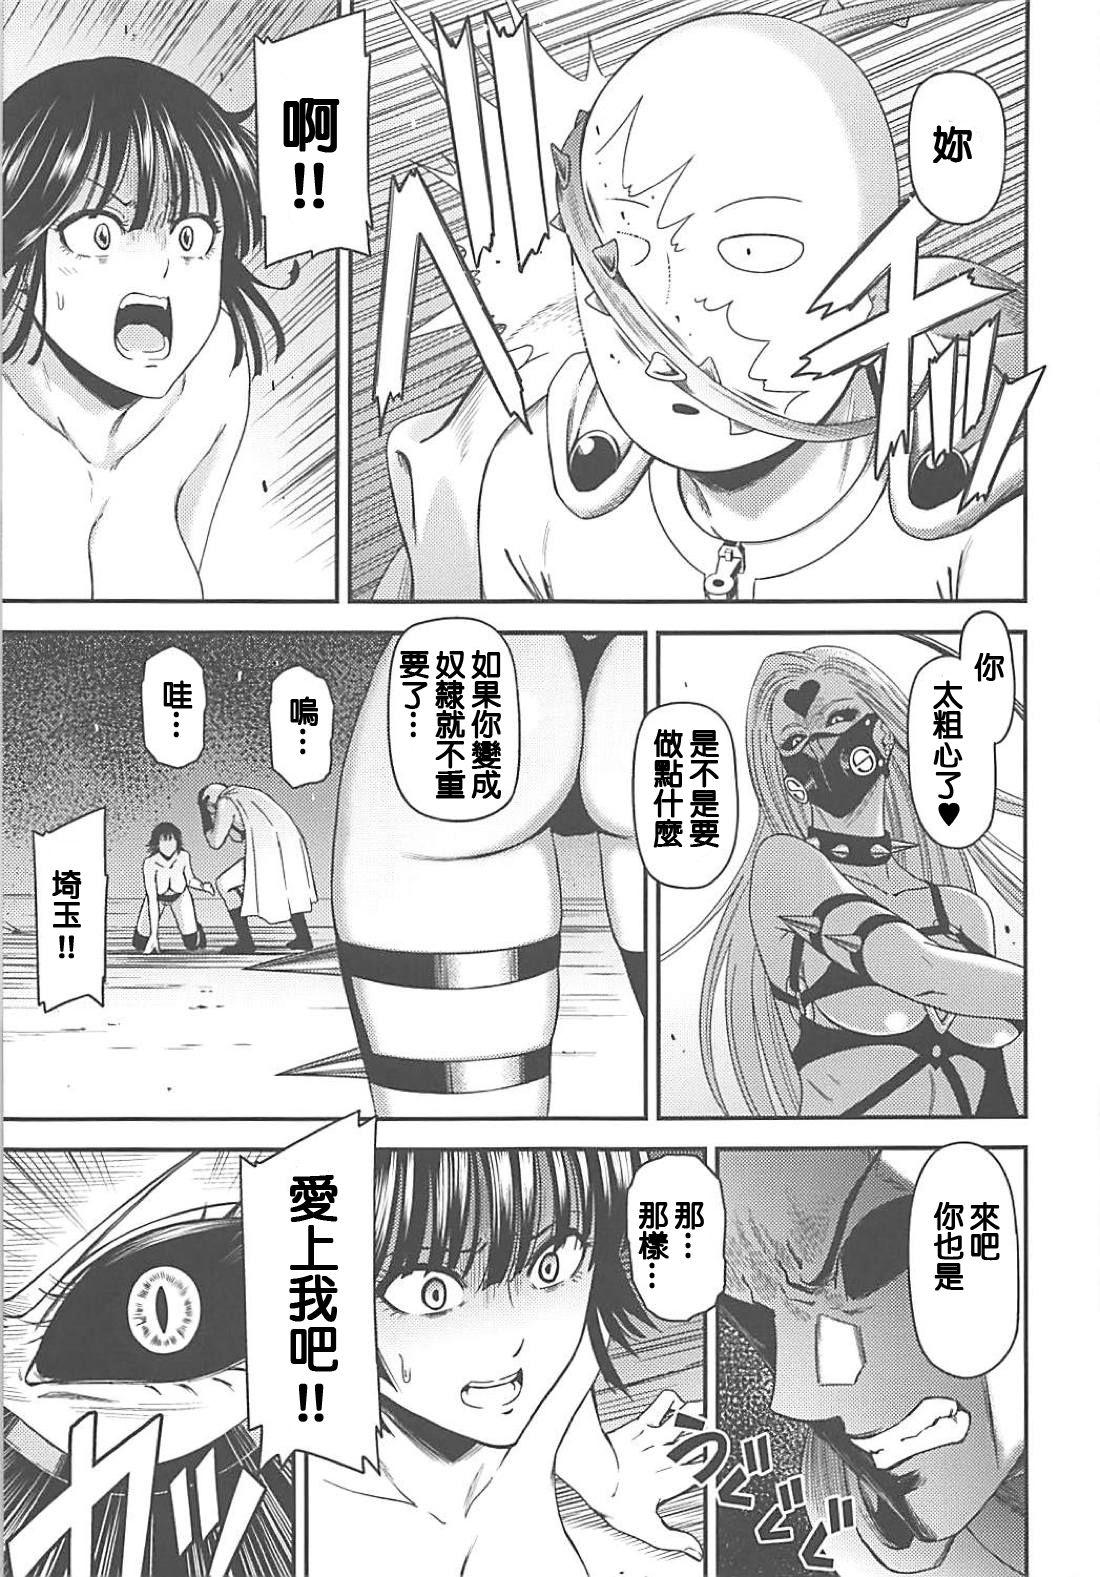 ONE-HURRICANE 7 Page 32 Of 34 one punch man hentai doujinshi, ONE-HURRICANE...